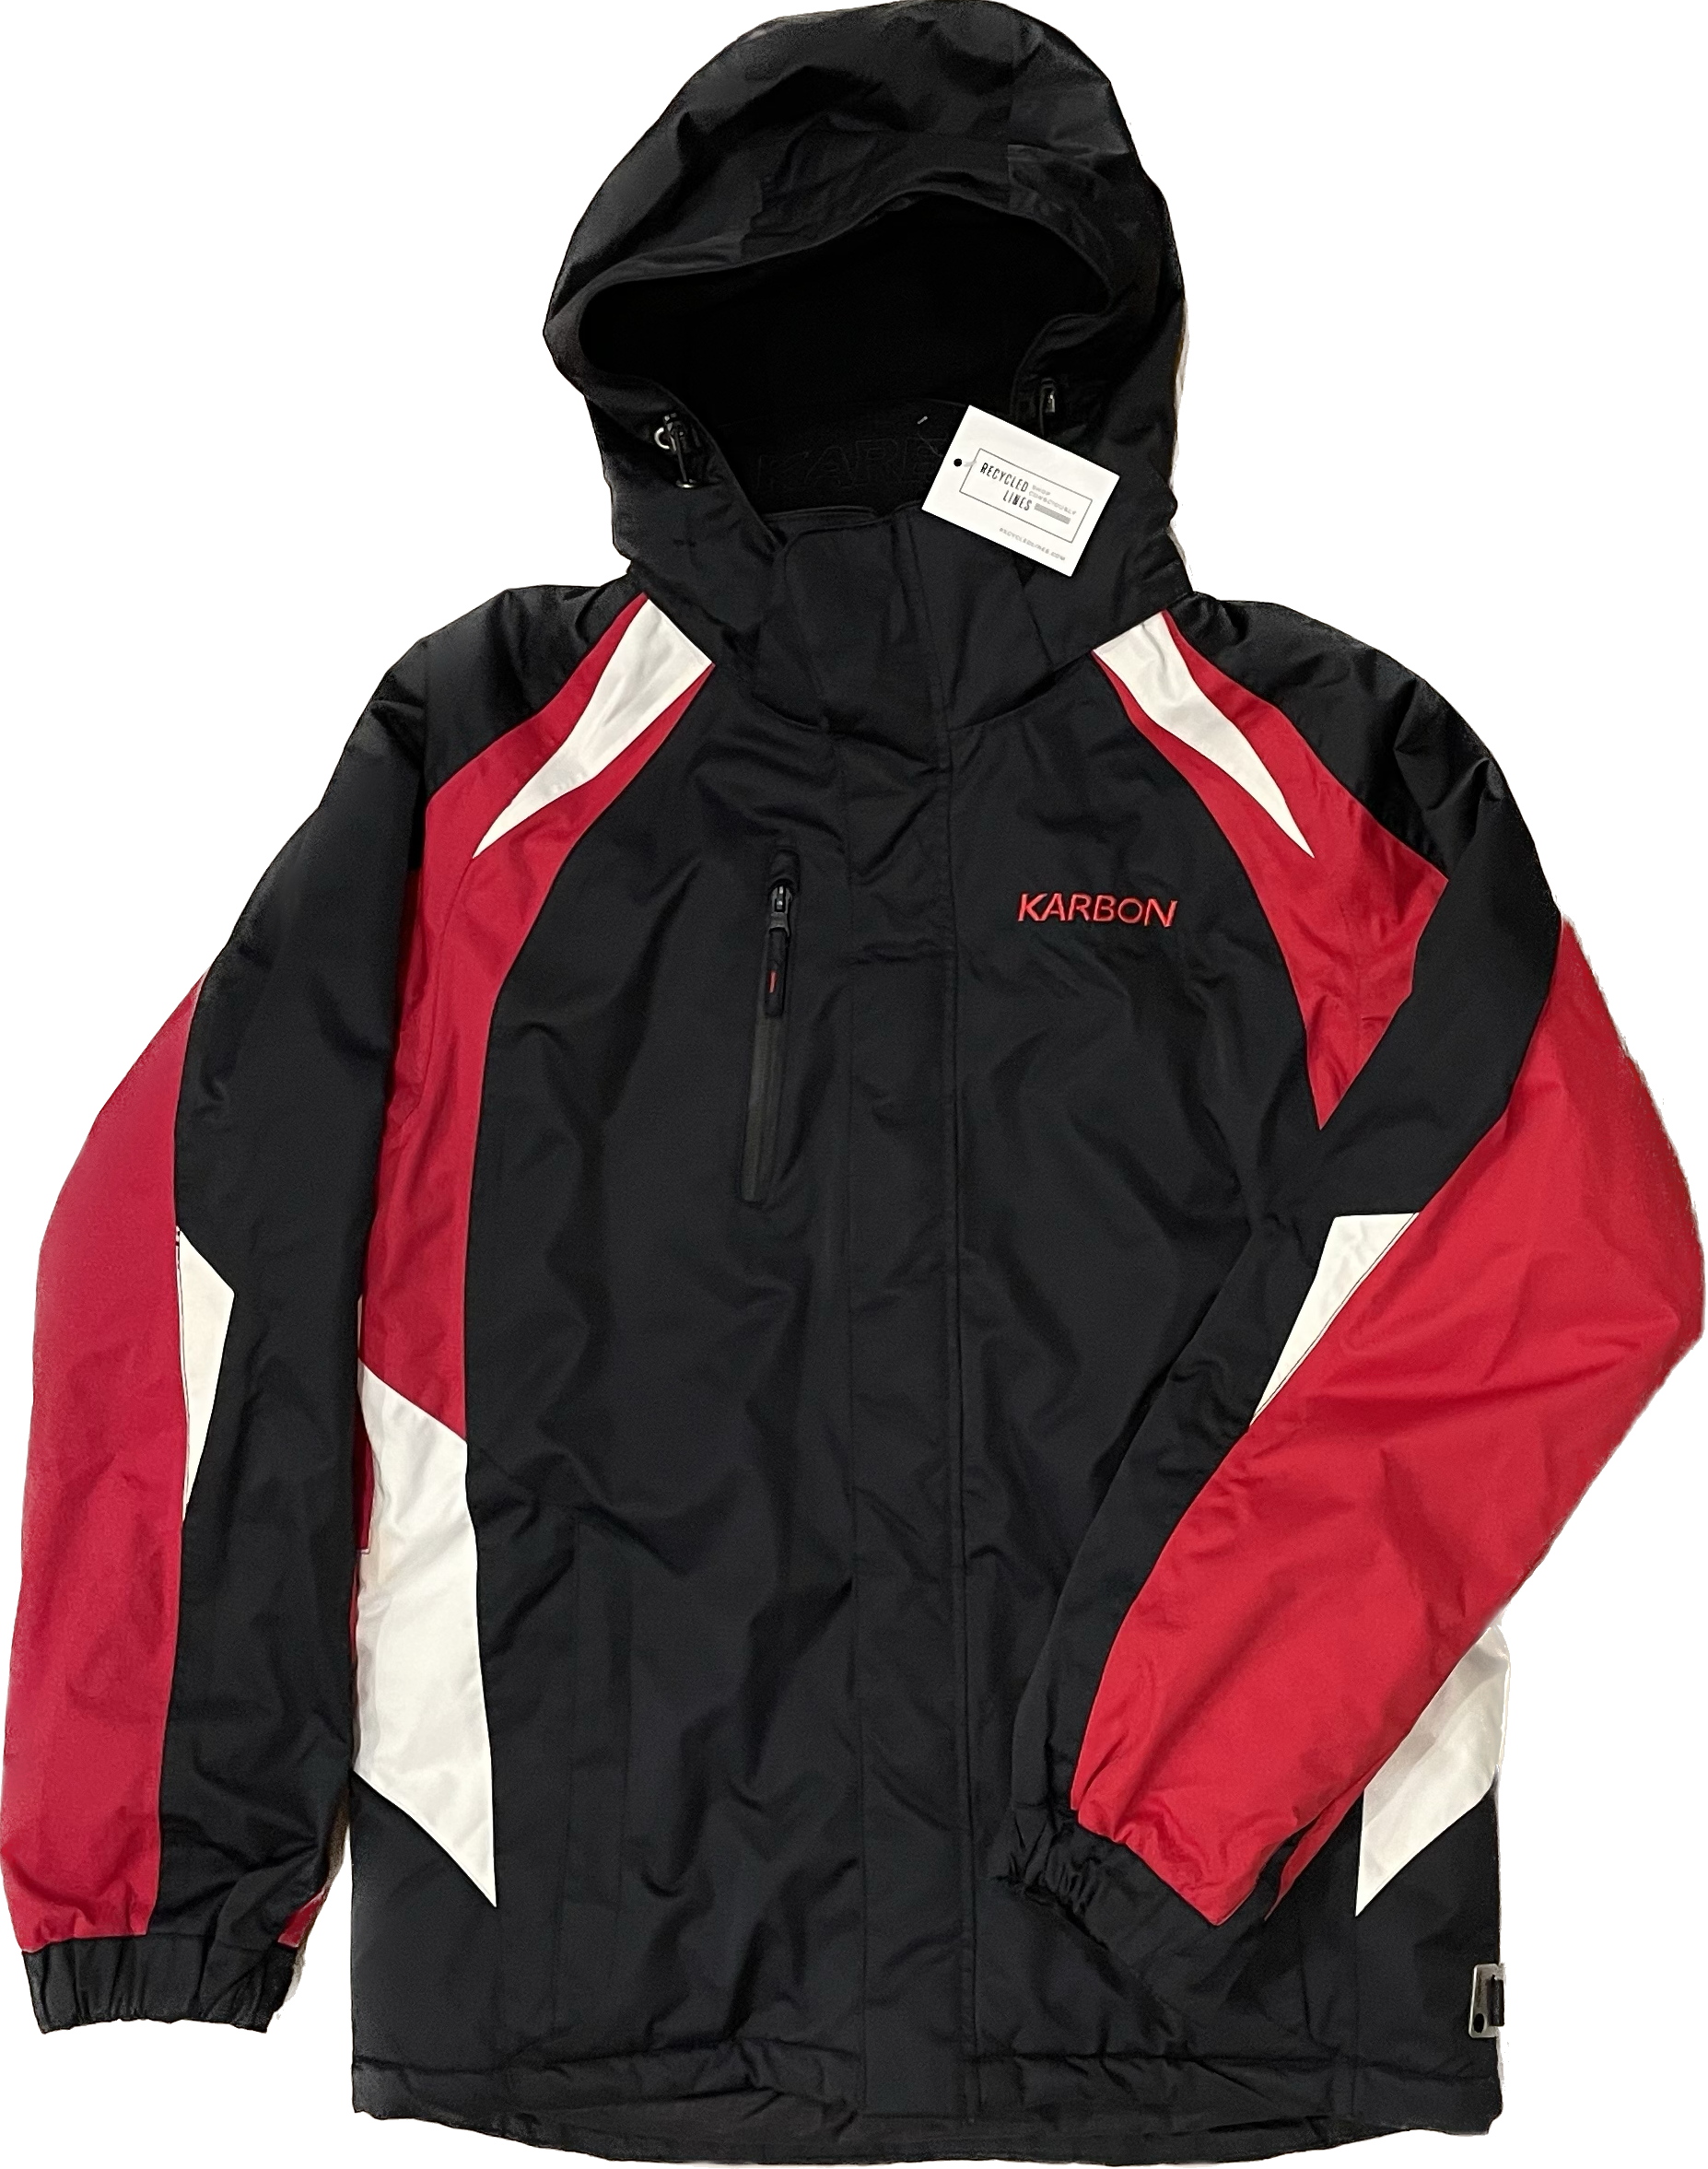 Karbon Snow Jacket, Black/Red/White Mens Size S